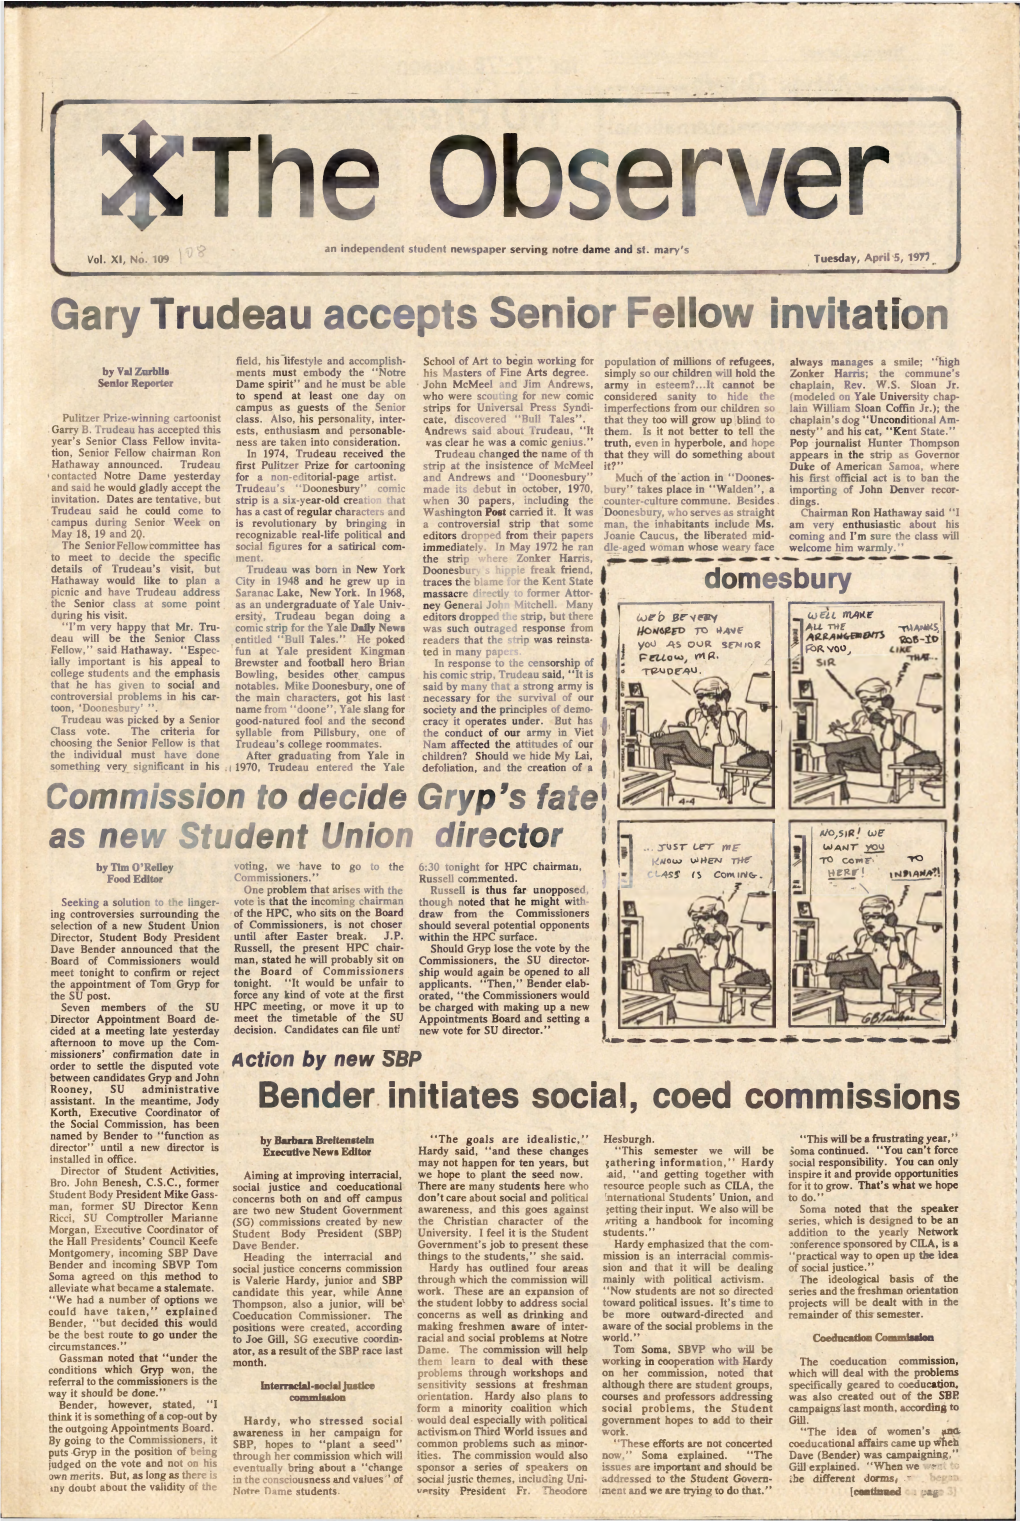 Gary Trudeau Accepts Senior Fellow Invitation